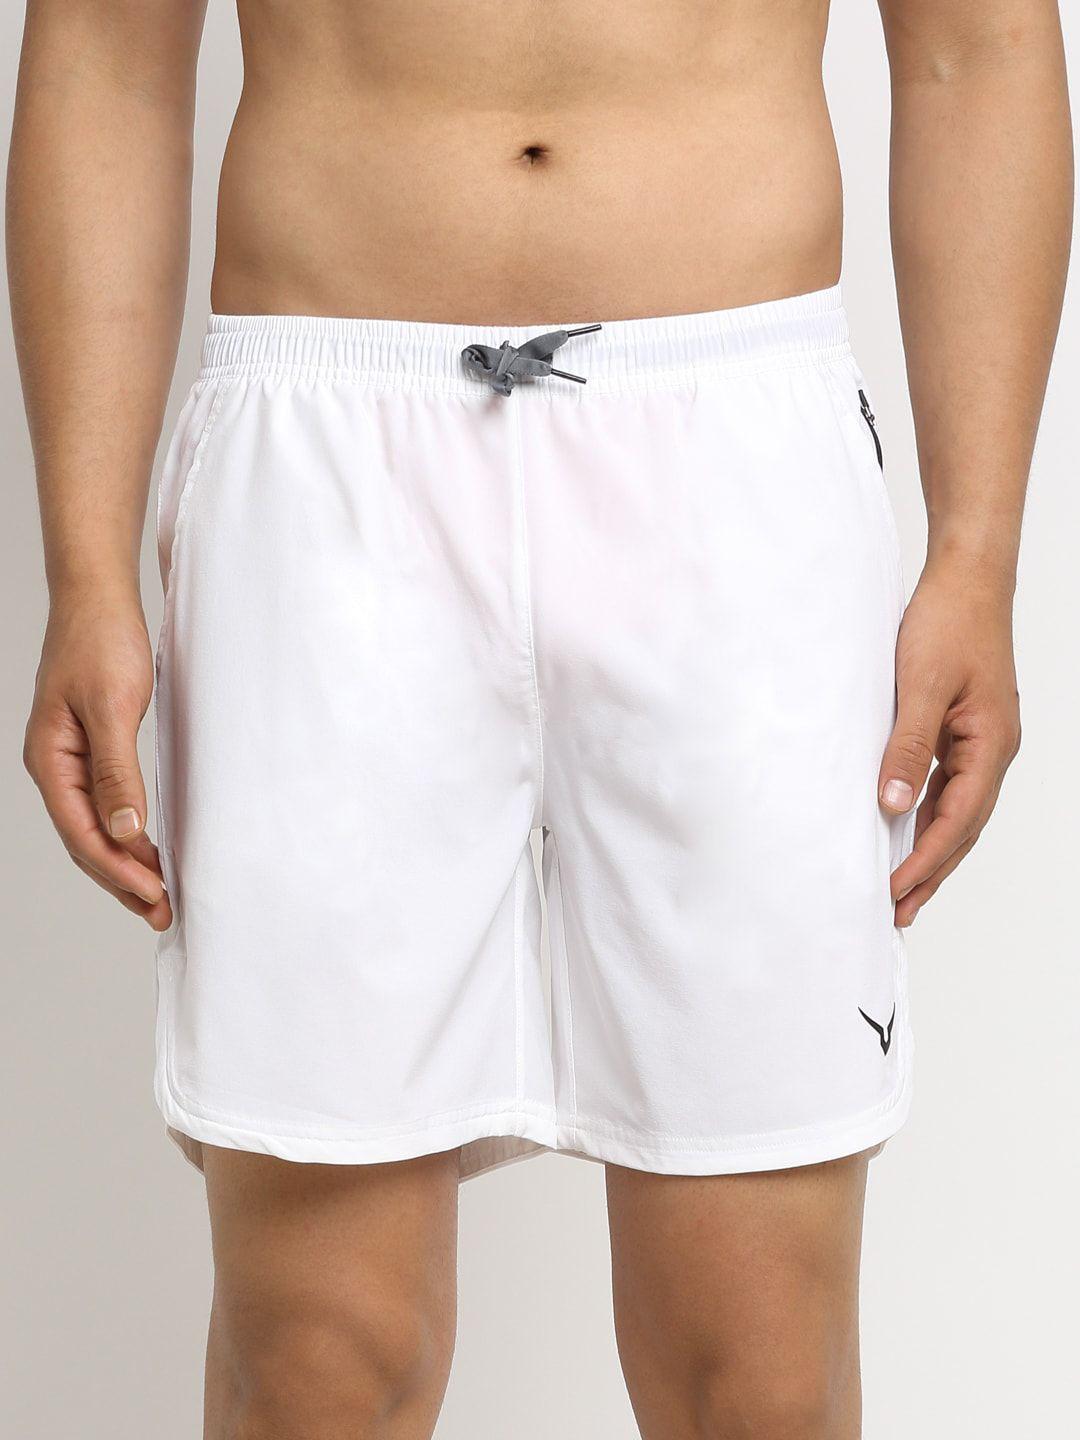 invincible-men-white-mid-rise-sports-shorts